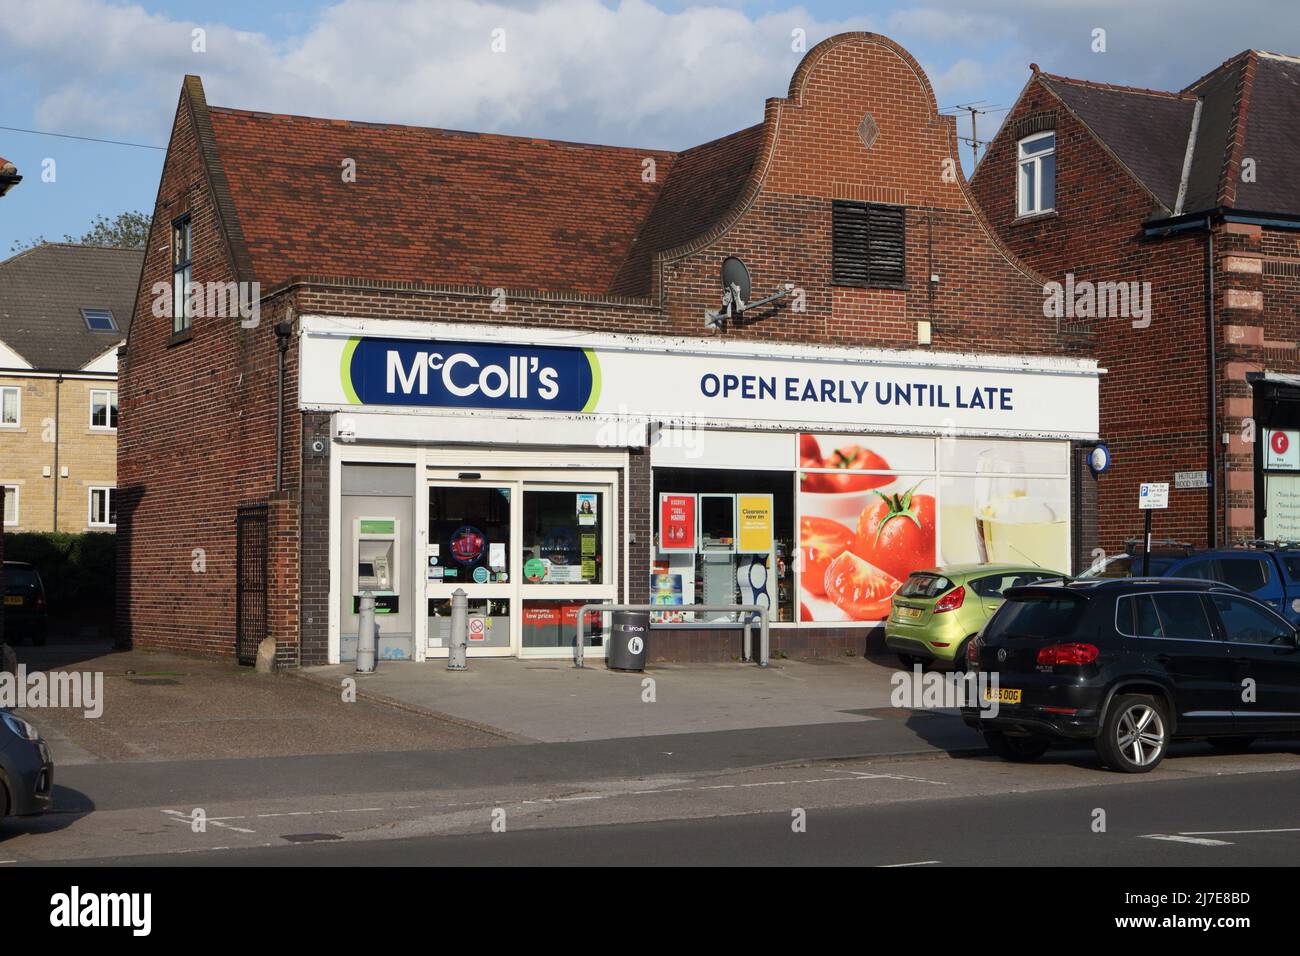 McColl's store on Hutcliffe Wood road, Sheffield England Stock Photo